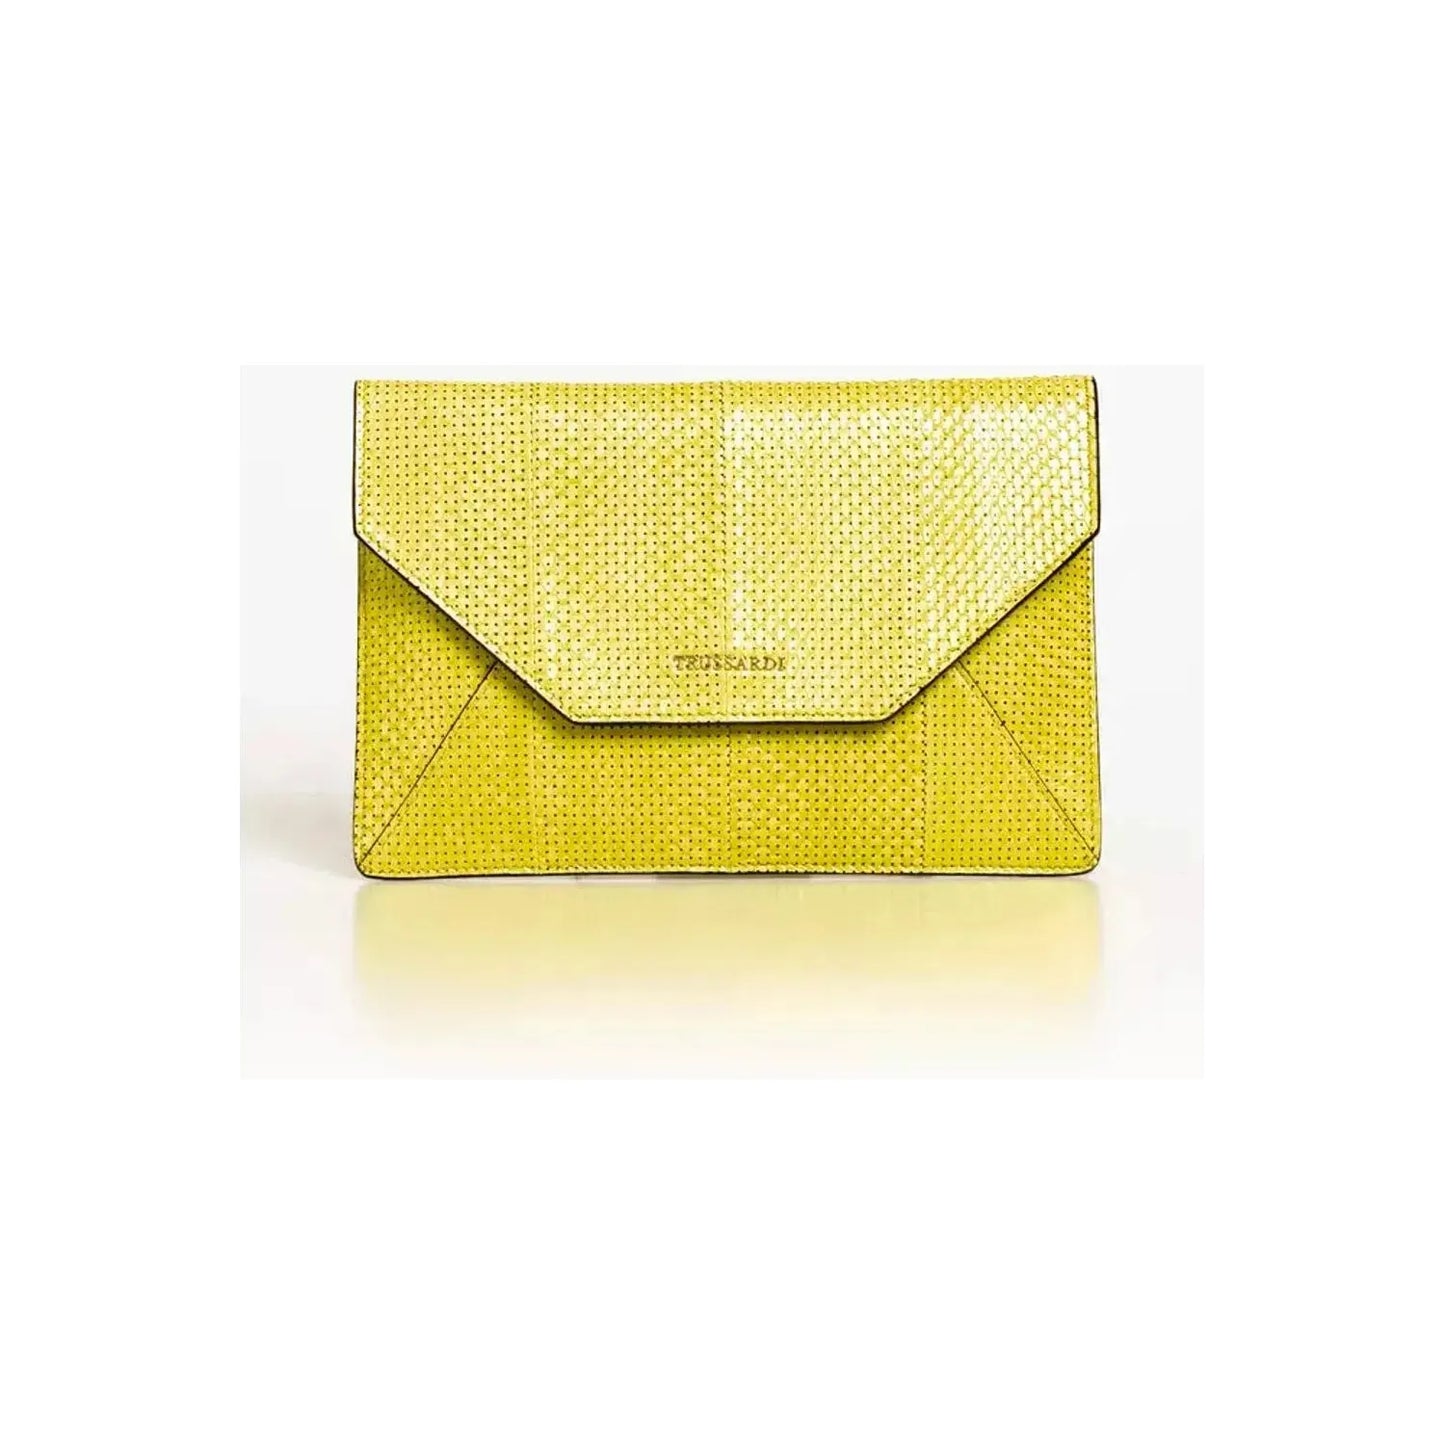 Trussardi Elegant Envelope Clutch in Delicate Elaphe yellow-leather-clutch-bag WOMAN CLUTCH stock_product_image_21569_667324310-38-680f0c63-943.webp